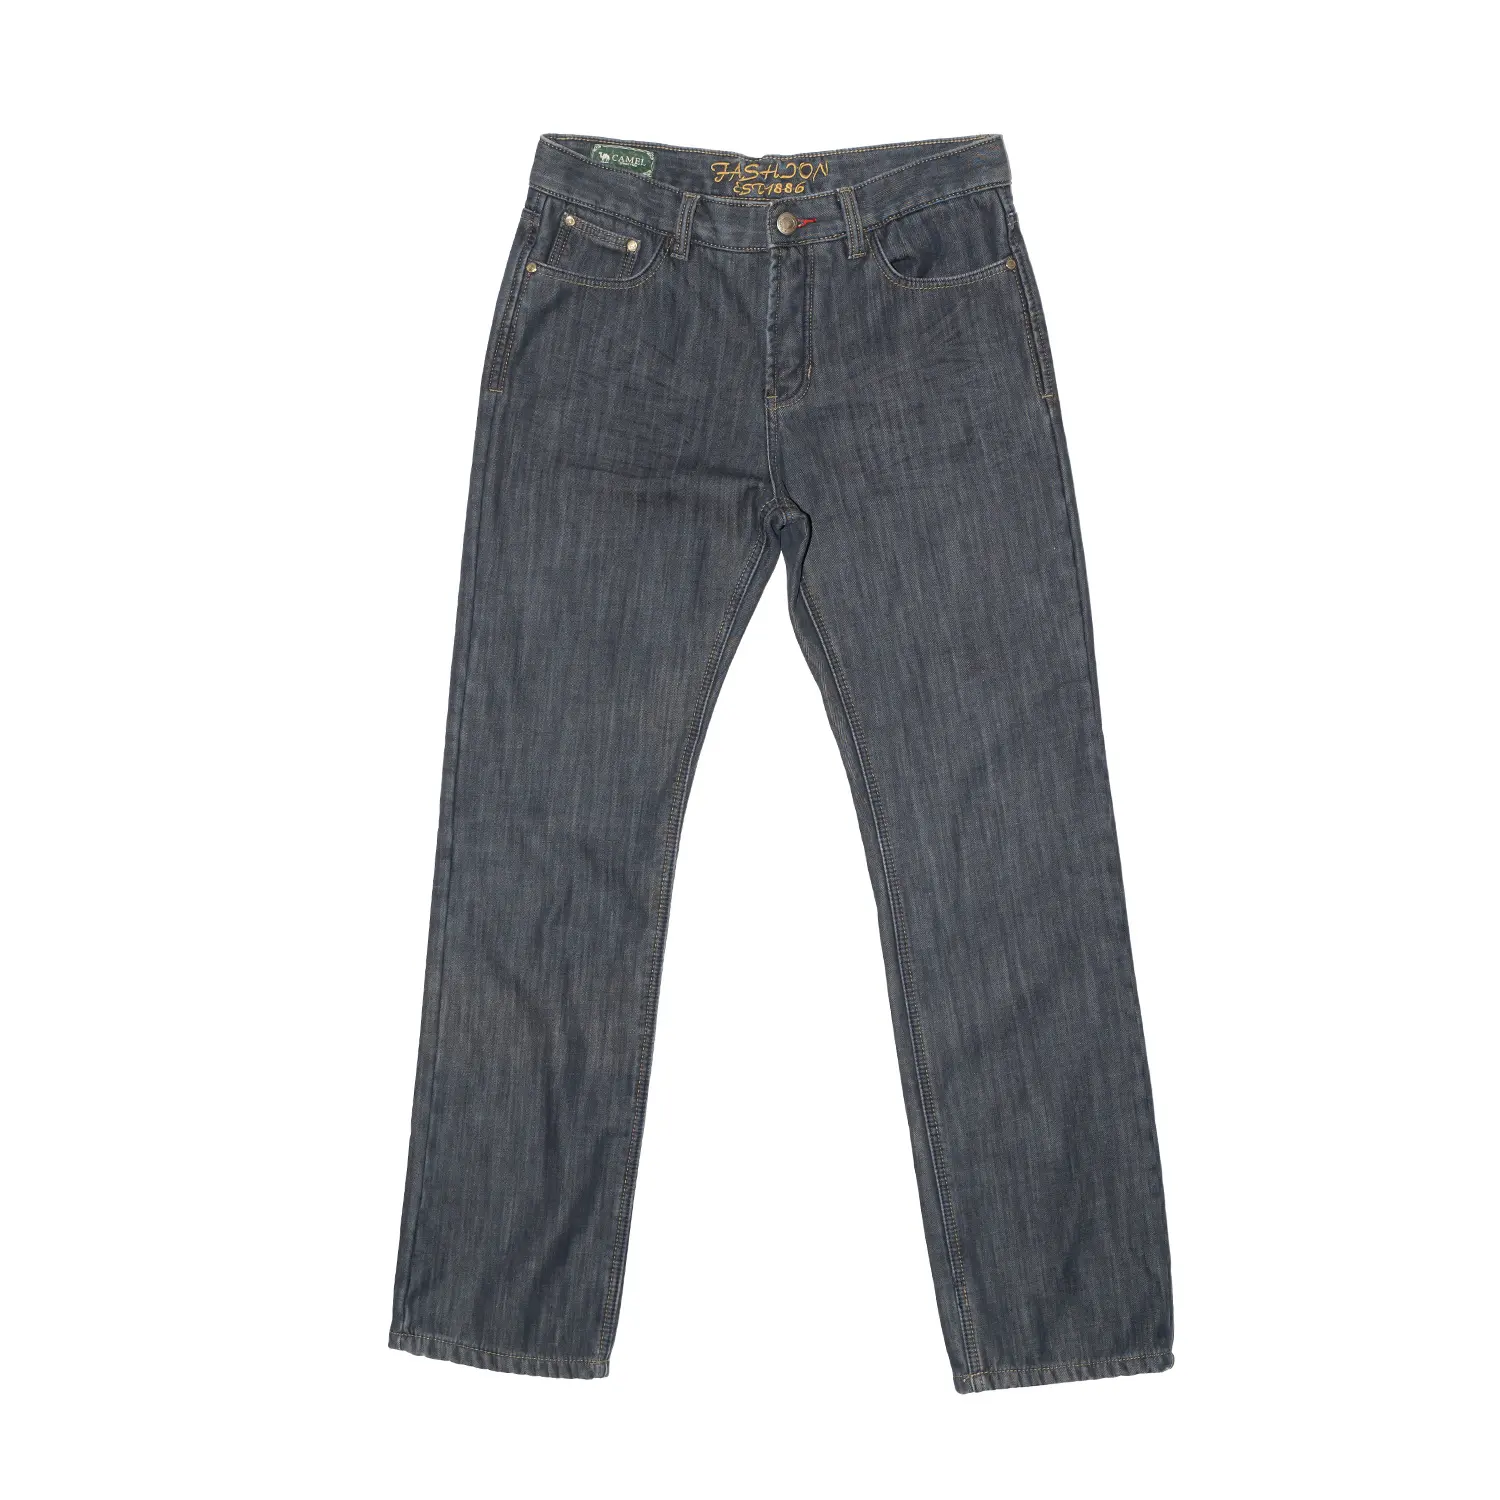 Celana Jeans Pria Bekas Pakai Kaus Grosir Celana Jeans Baru York Asia Jepang India BSG Baju Bekas